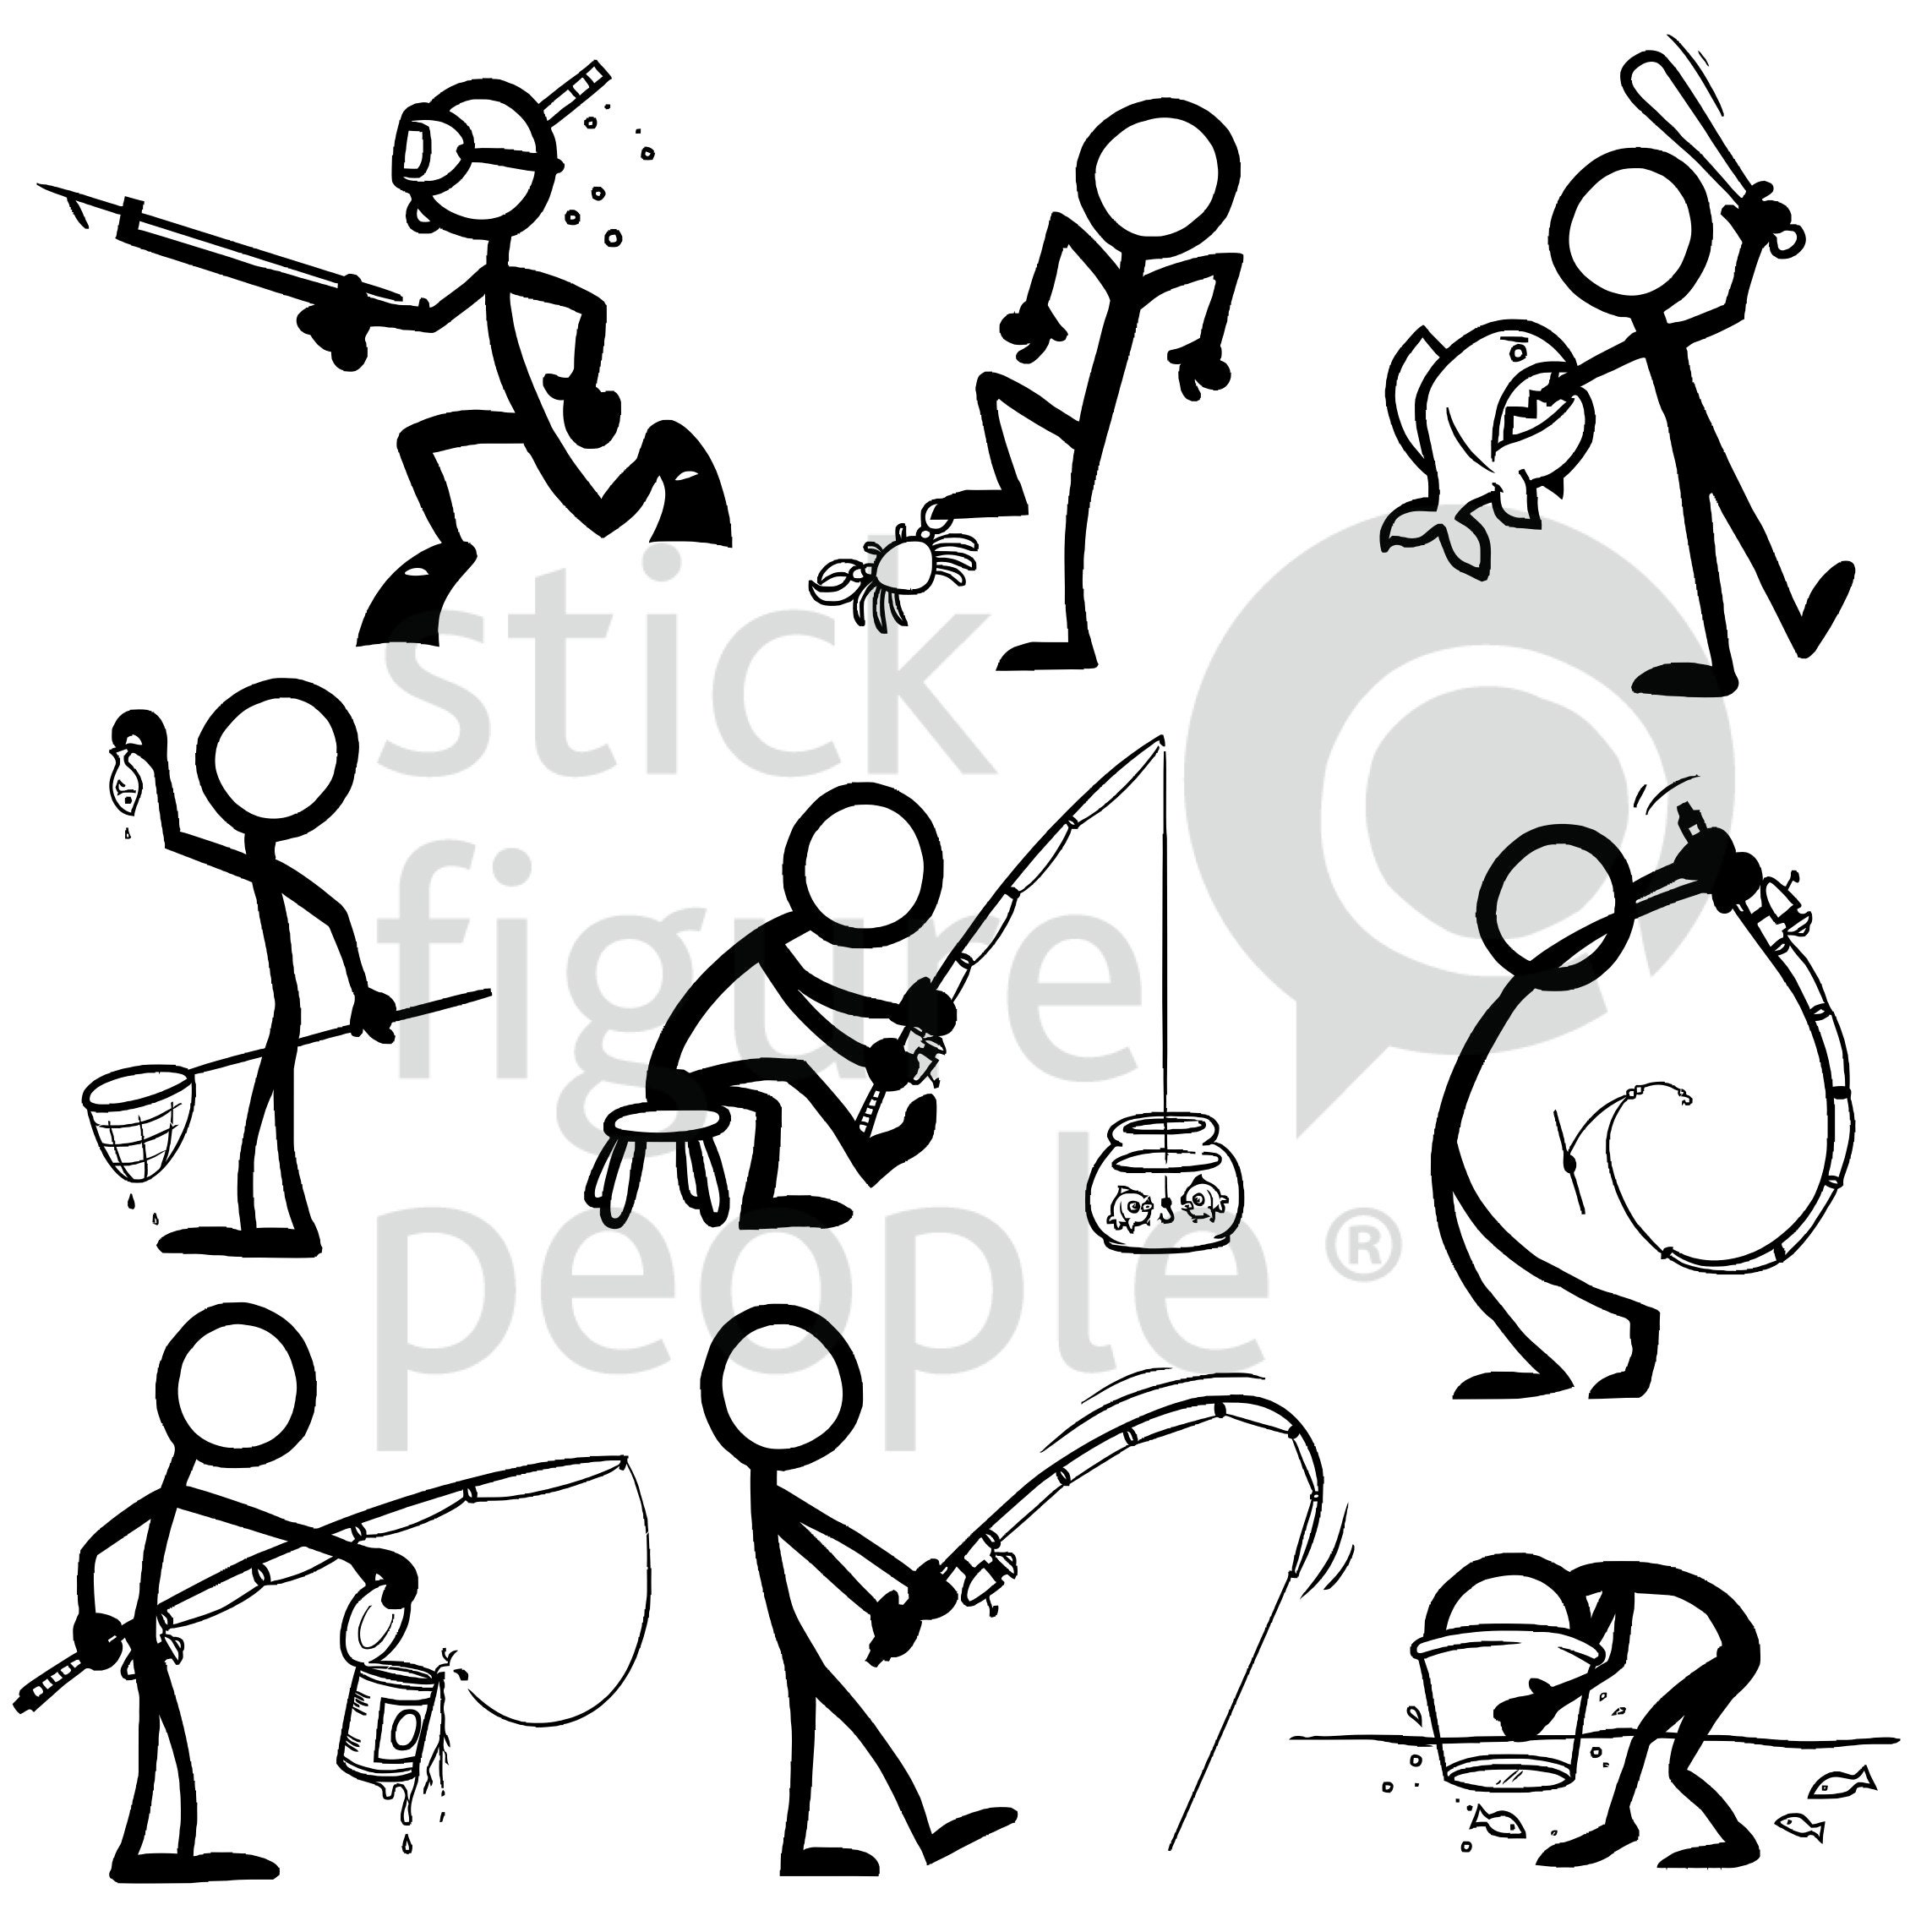 Fishing Stick Figure People, Stickfigure, Stick Man, Stick Figure, Stick  Figures, Stick People, Pdf, Svg, Dxf, Png, Cricut, Vector